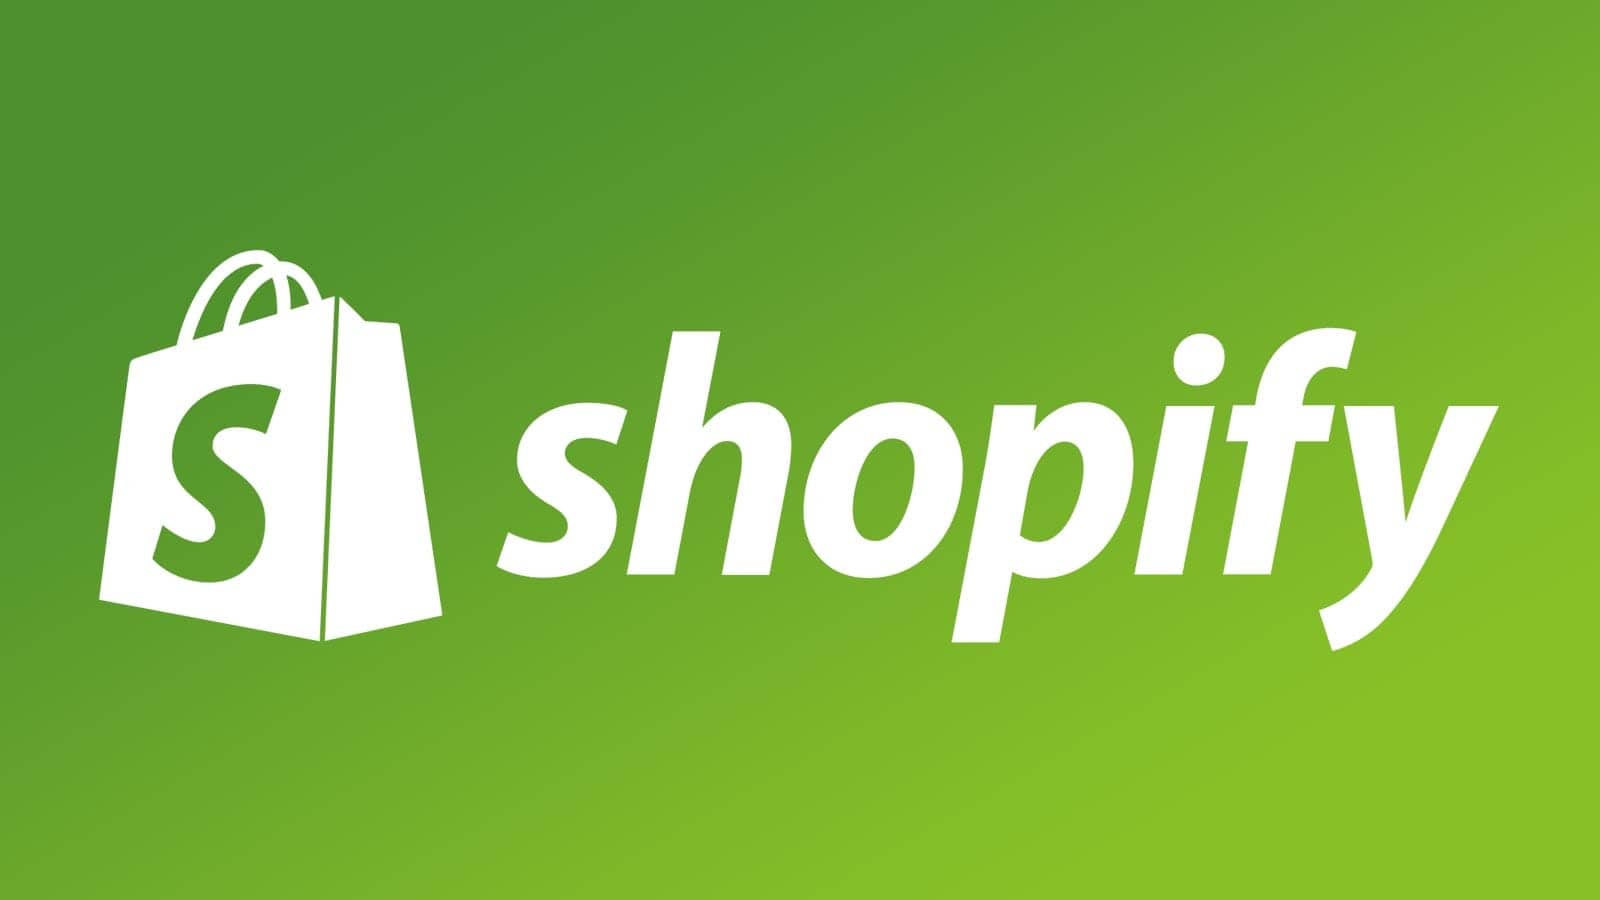 website on shopify